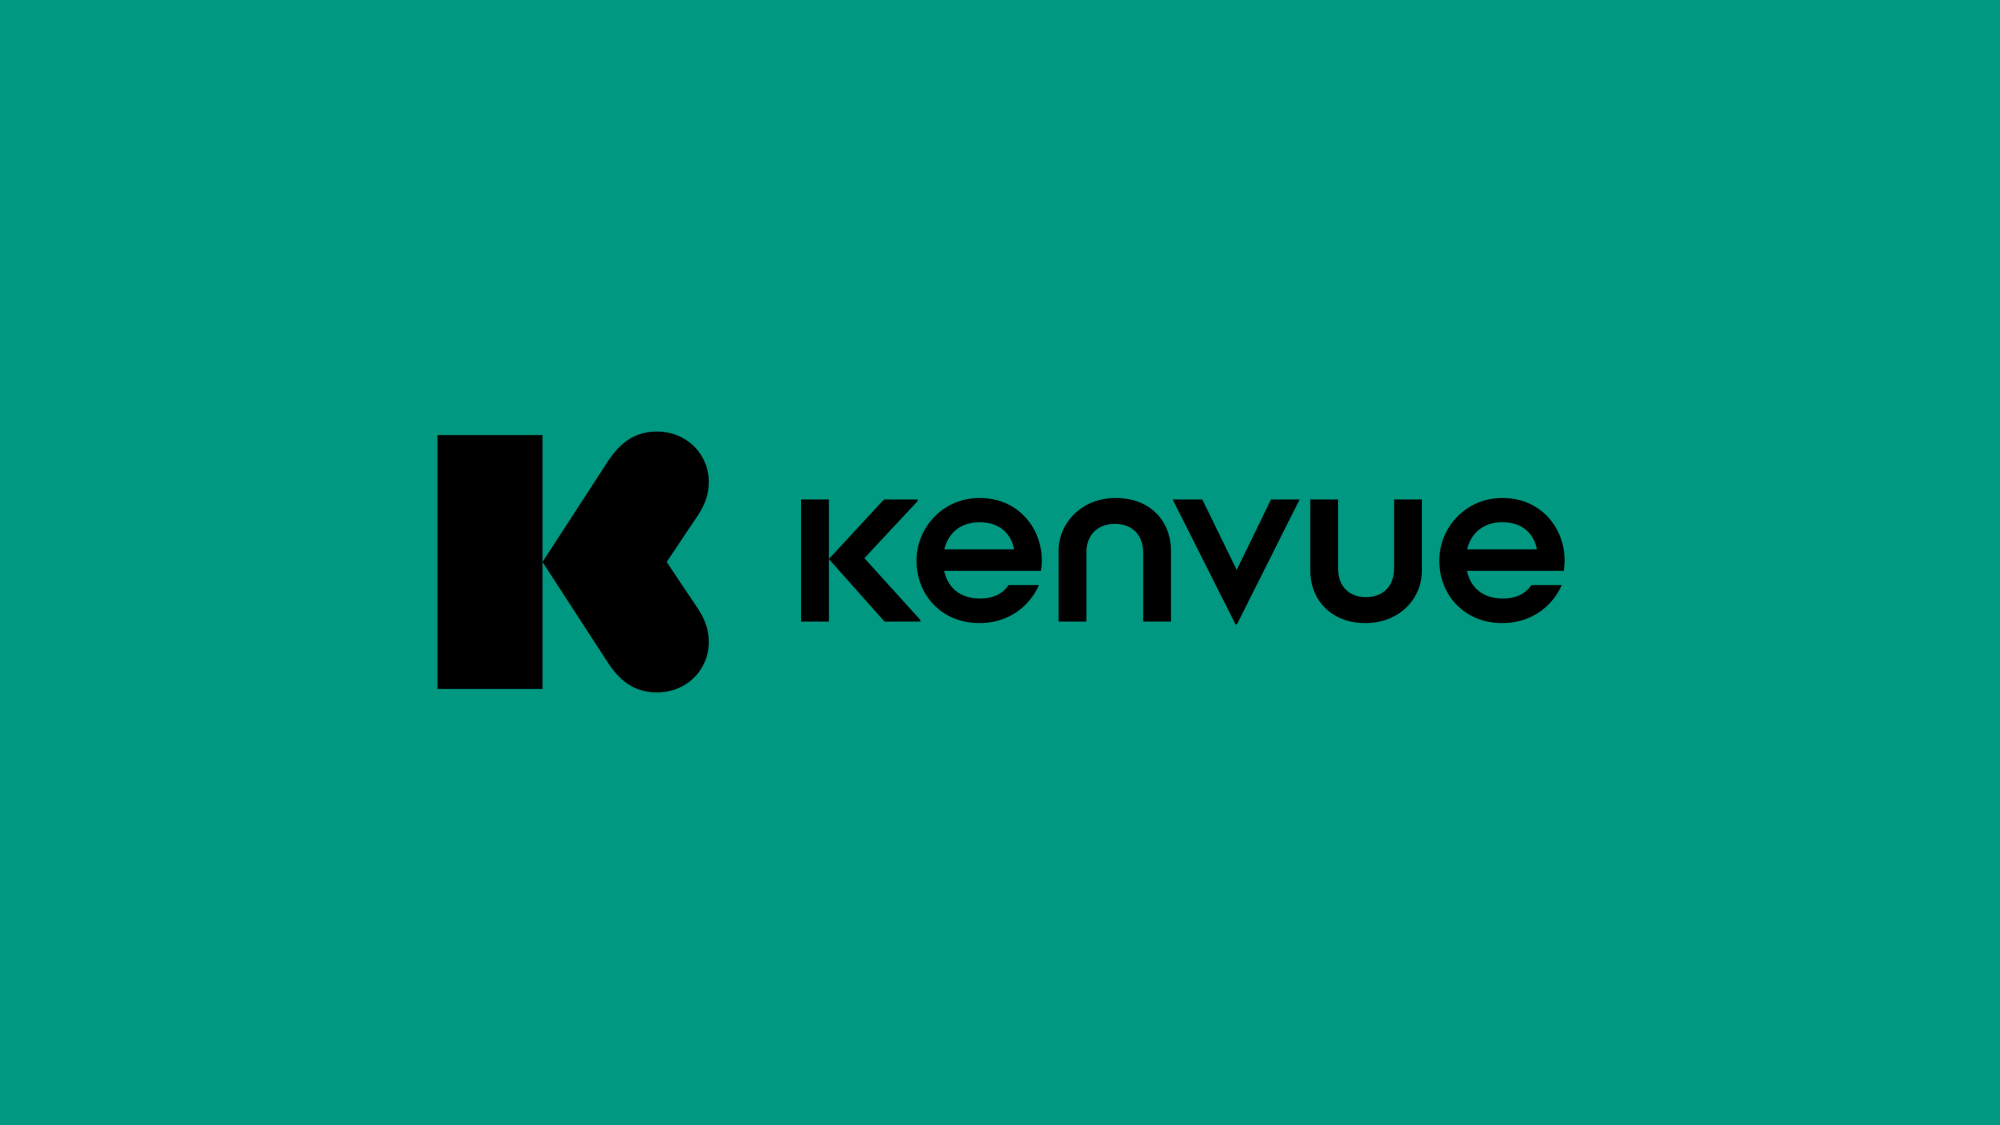 The Kenvue logo